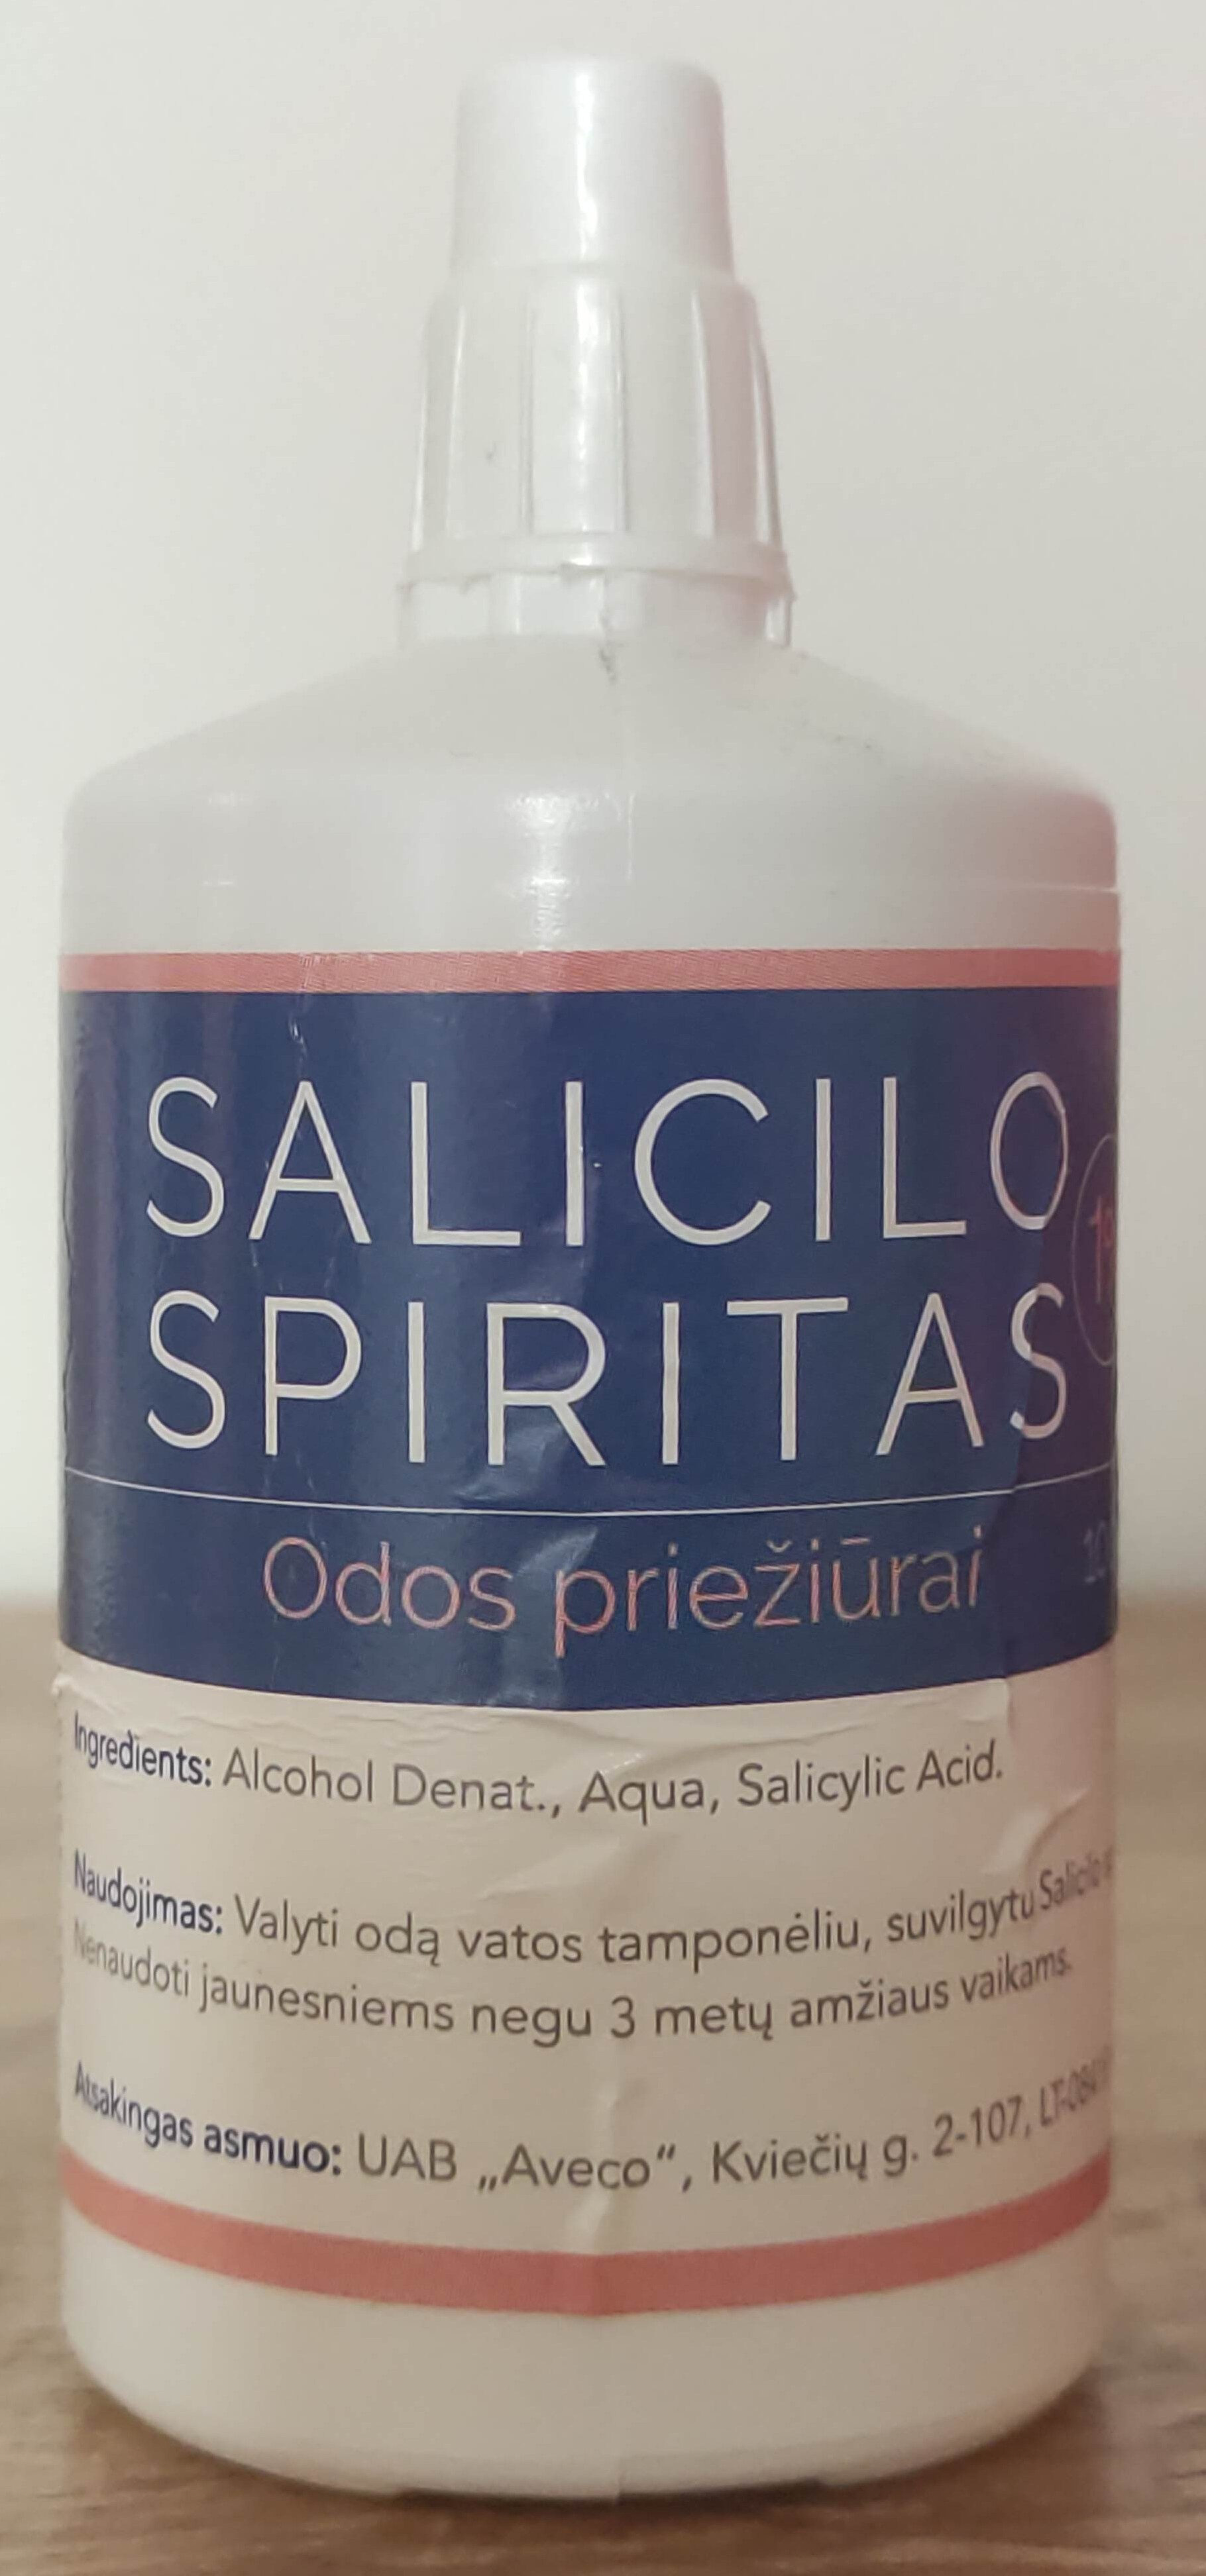 Salicilo spiritas - מוצר - lt